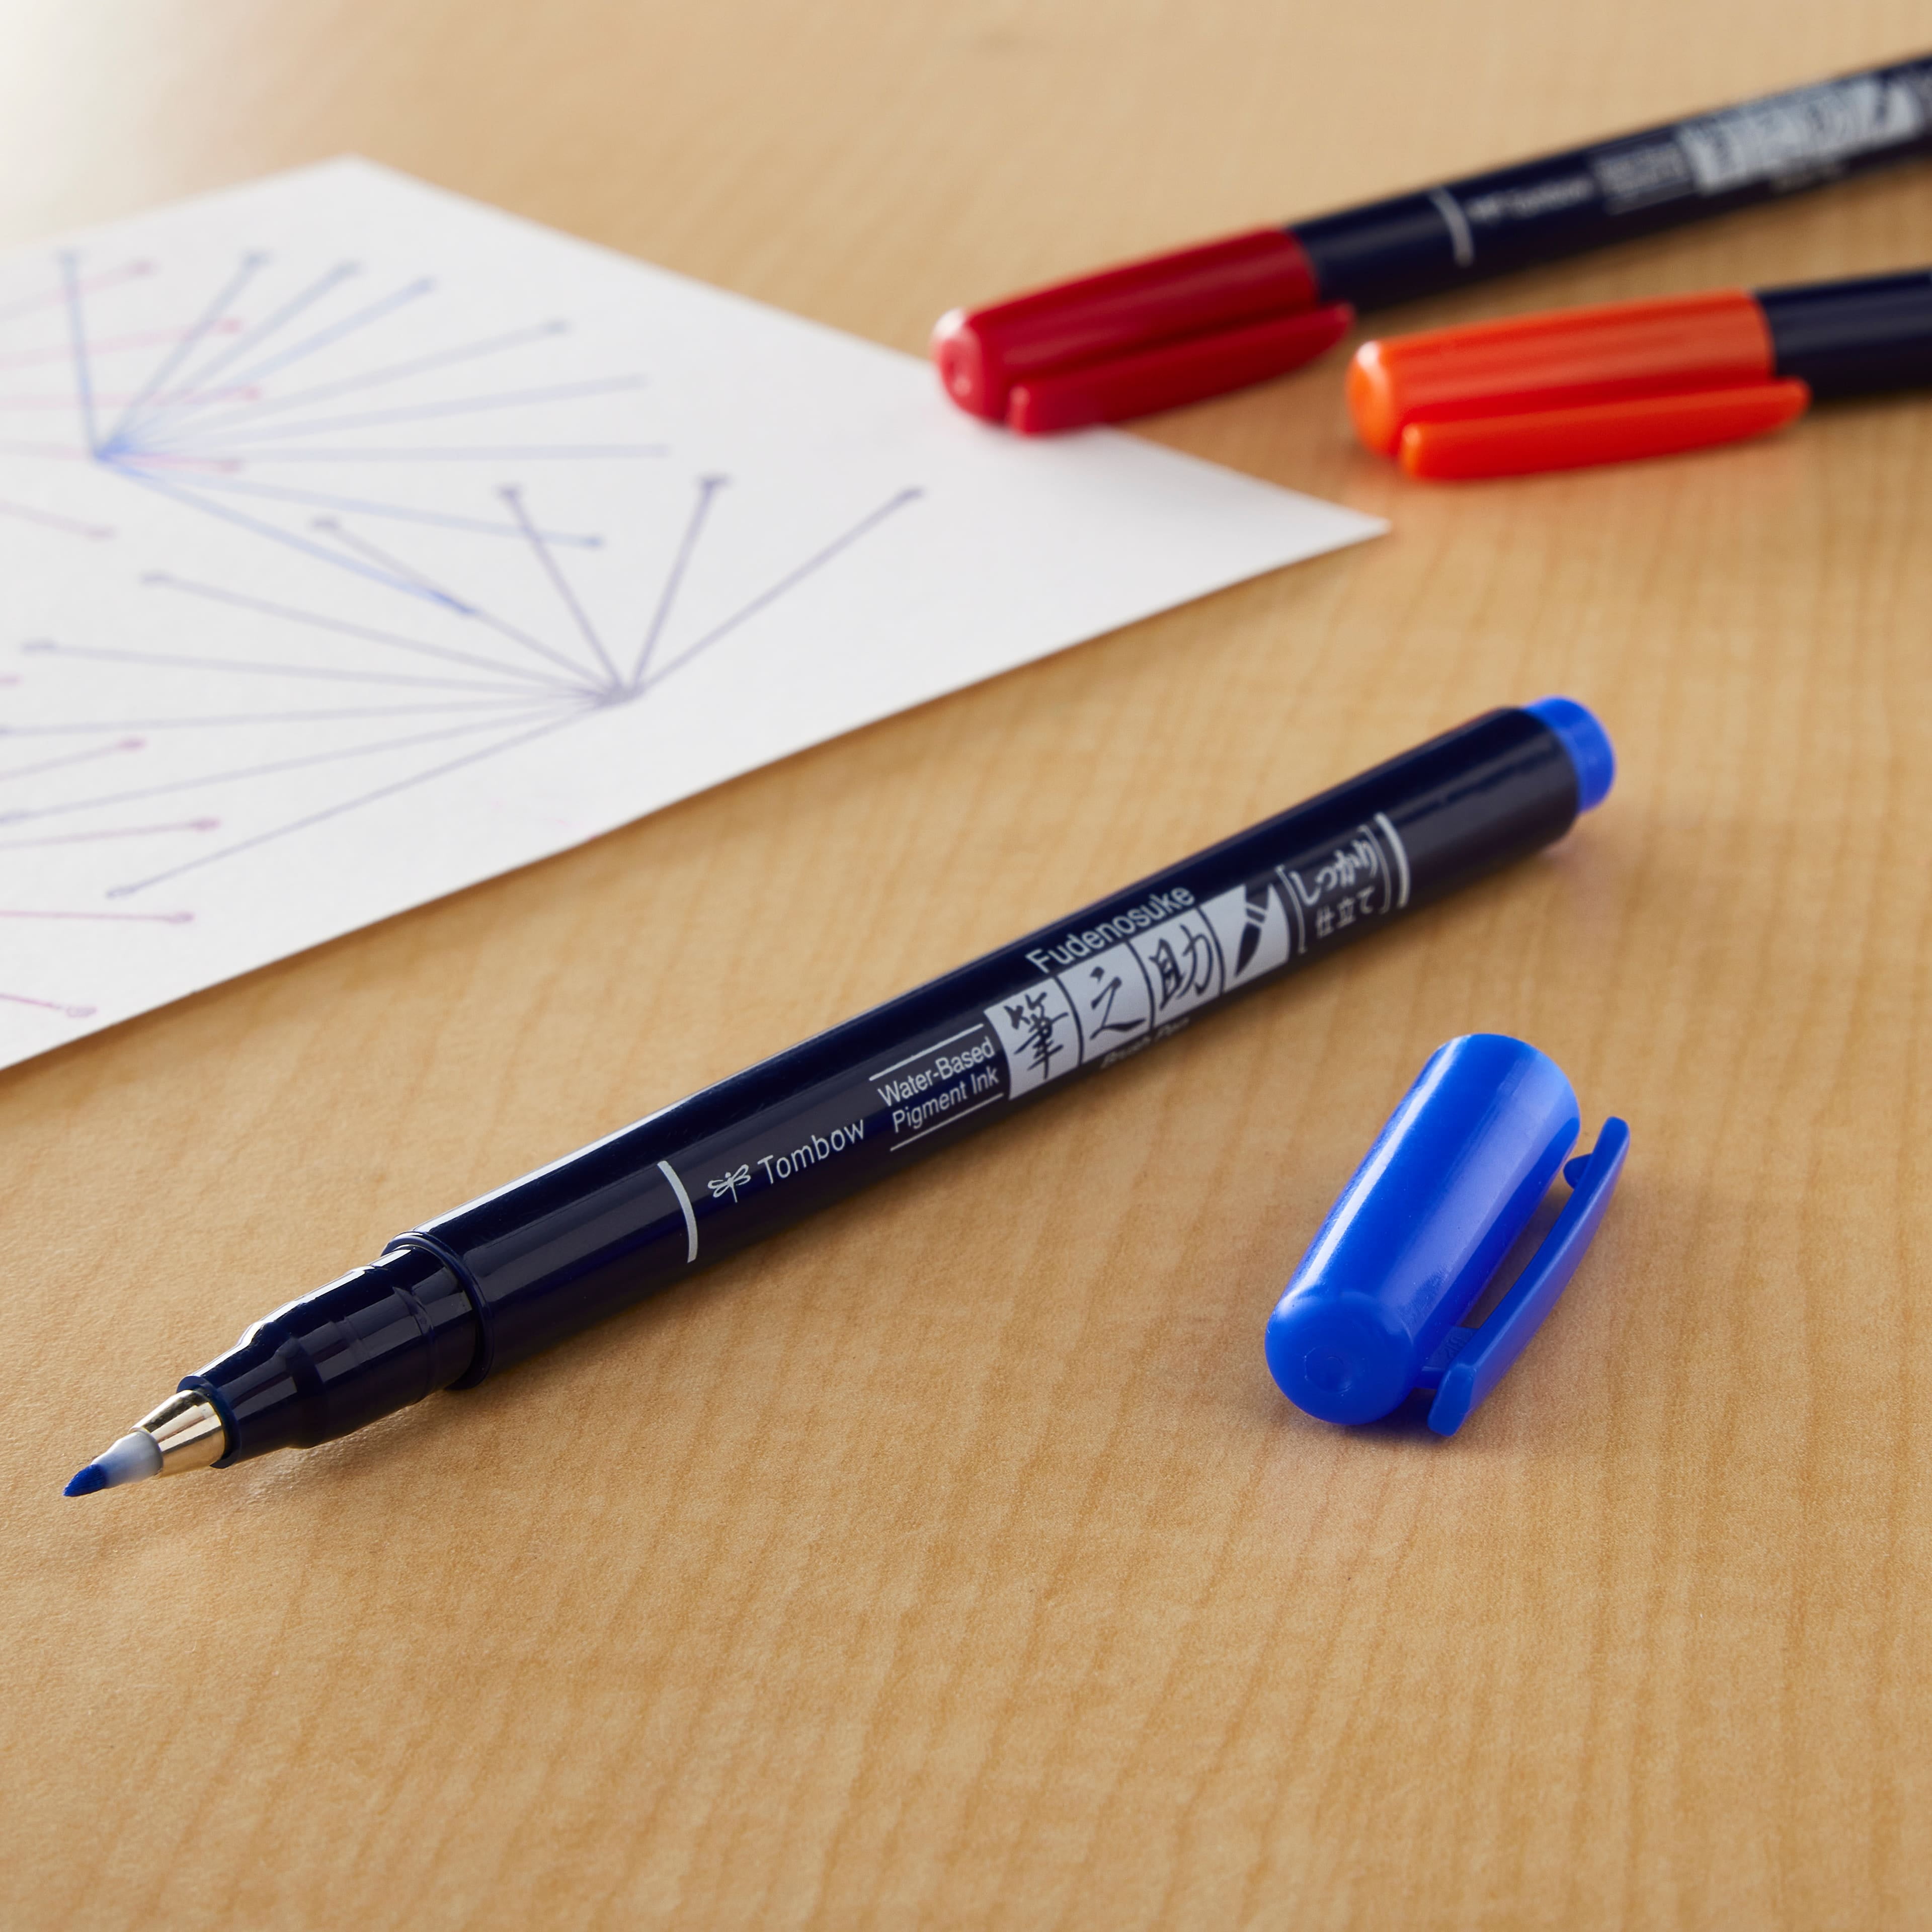 Tombow Fudenosuke Brush Pen - Hard - Blue